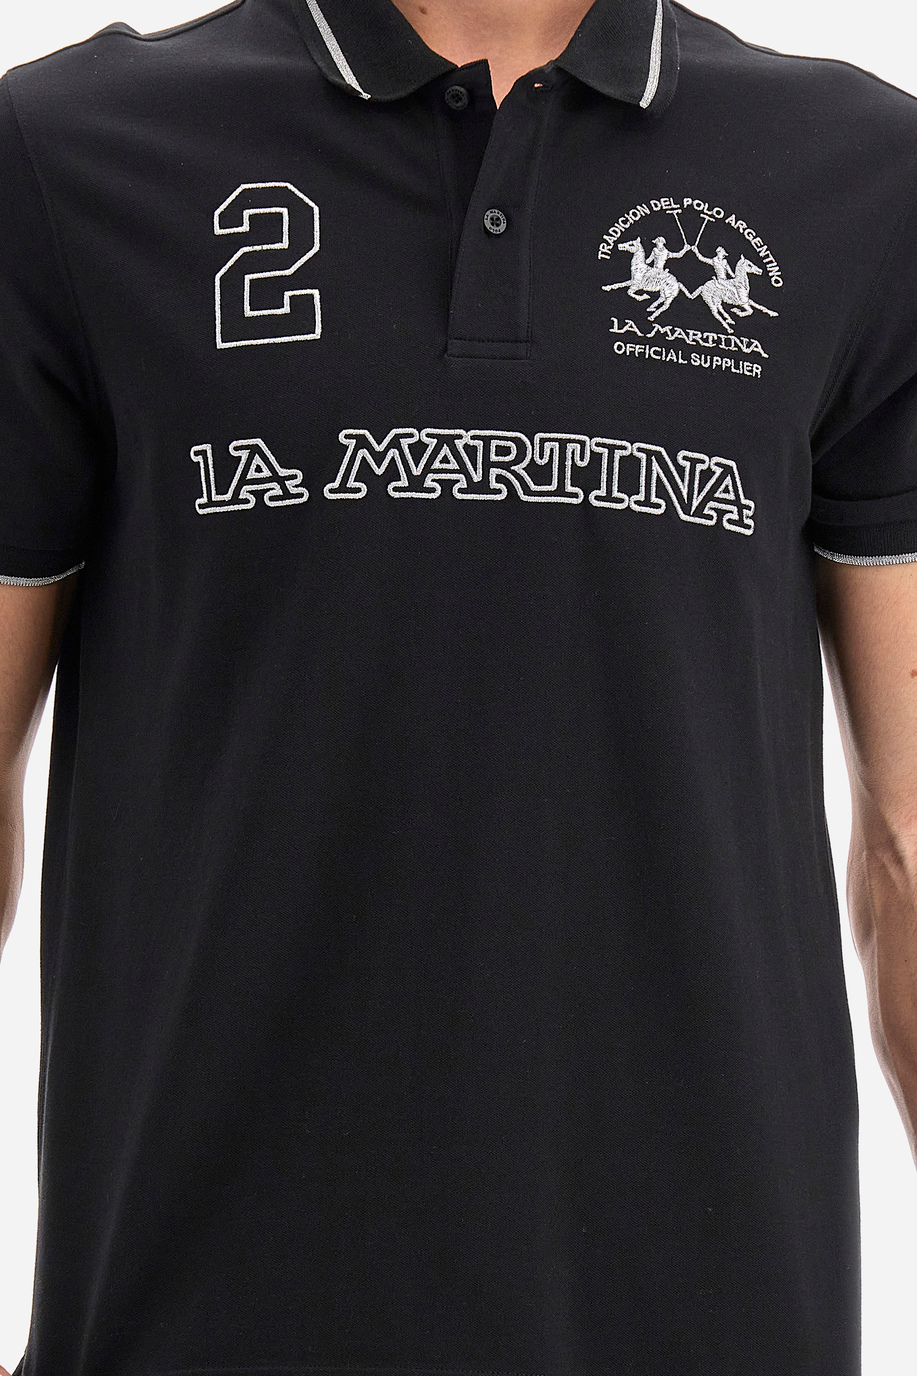 Herren-Kurzarm-Poloshirt aus Stretch-Baumwolle mit normaler Passform - Rosano - Poloshirts | La Martina - Official Online Shop